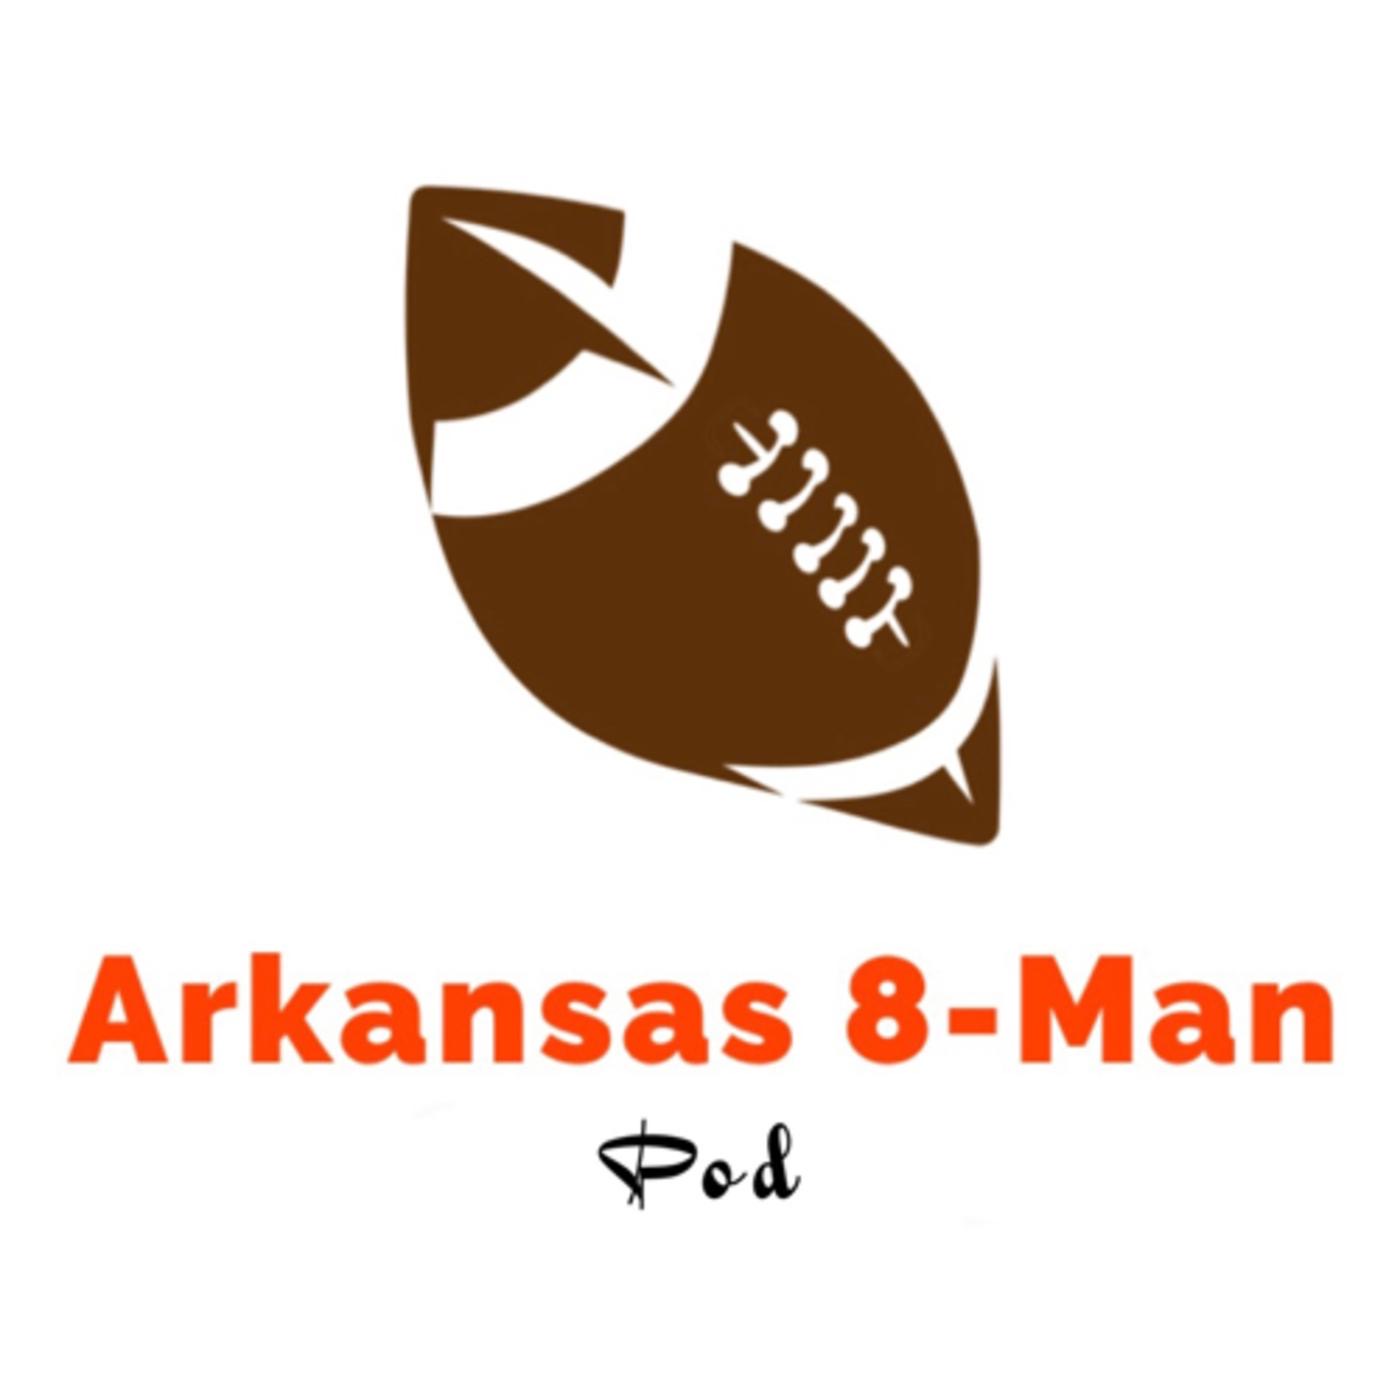 Arkansas 8-Man Pod Episode 7